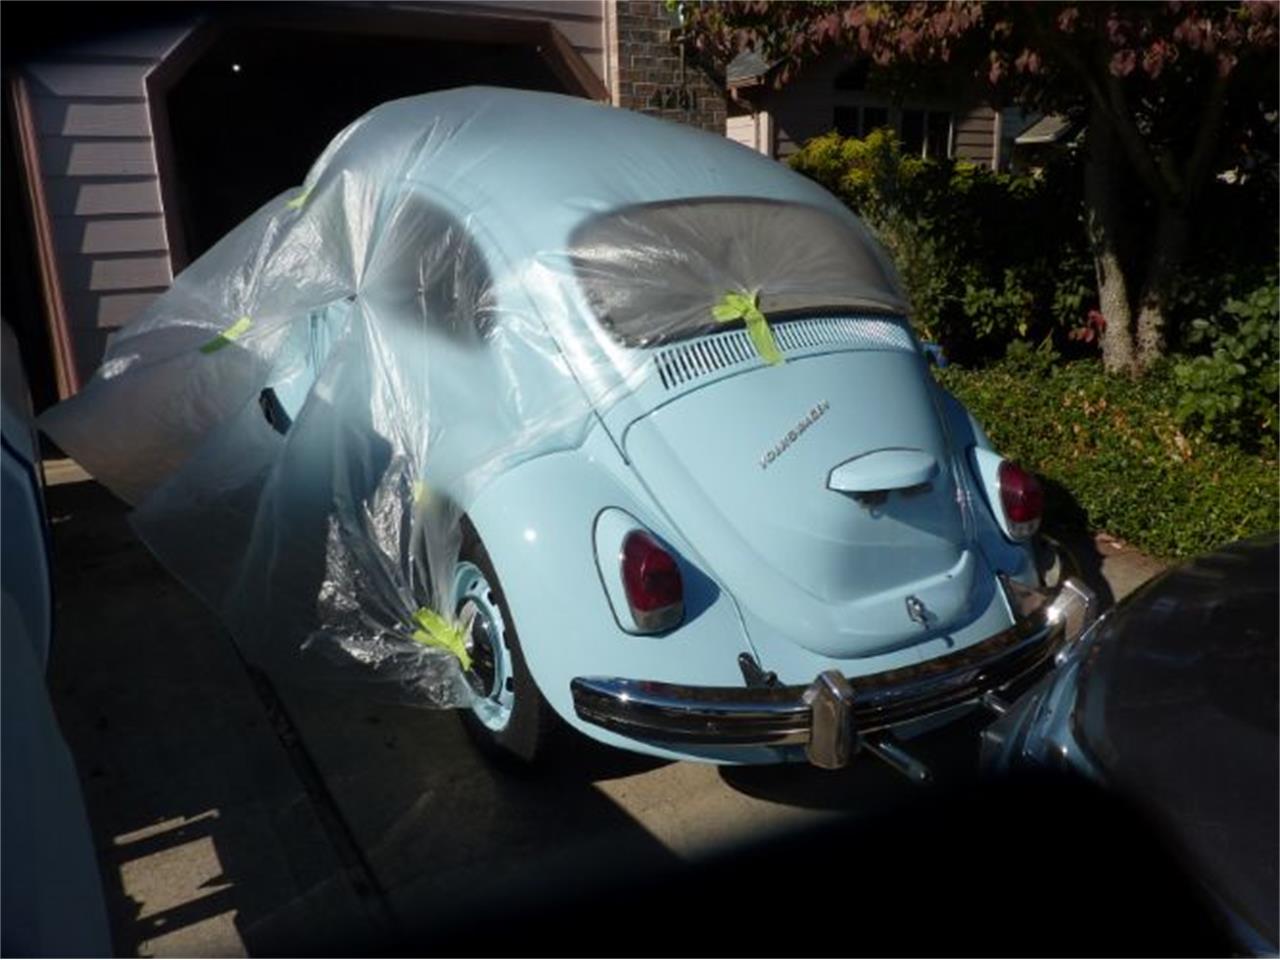 1969 Volkswagen Beetle for sale in Cadillac, MI – photo 13